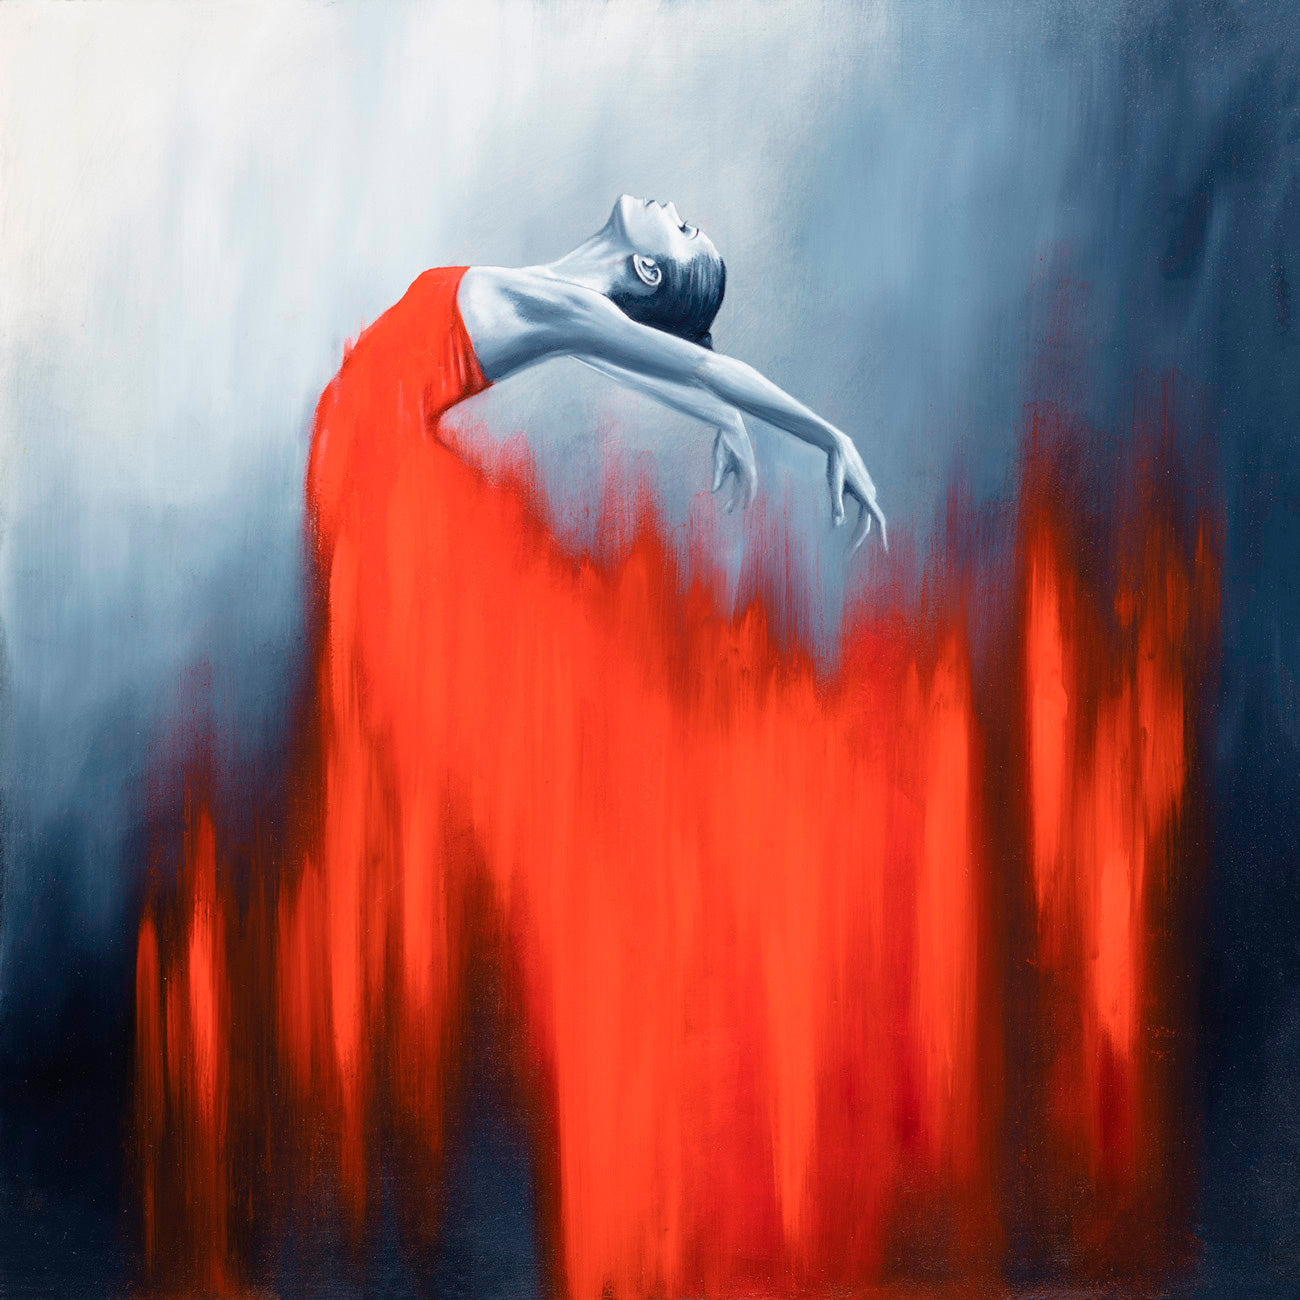 Ben Payne - 'Red Dancer' - Framed Original Art